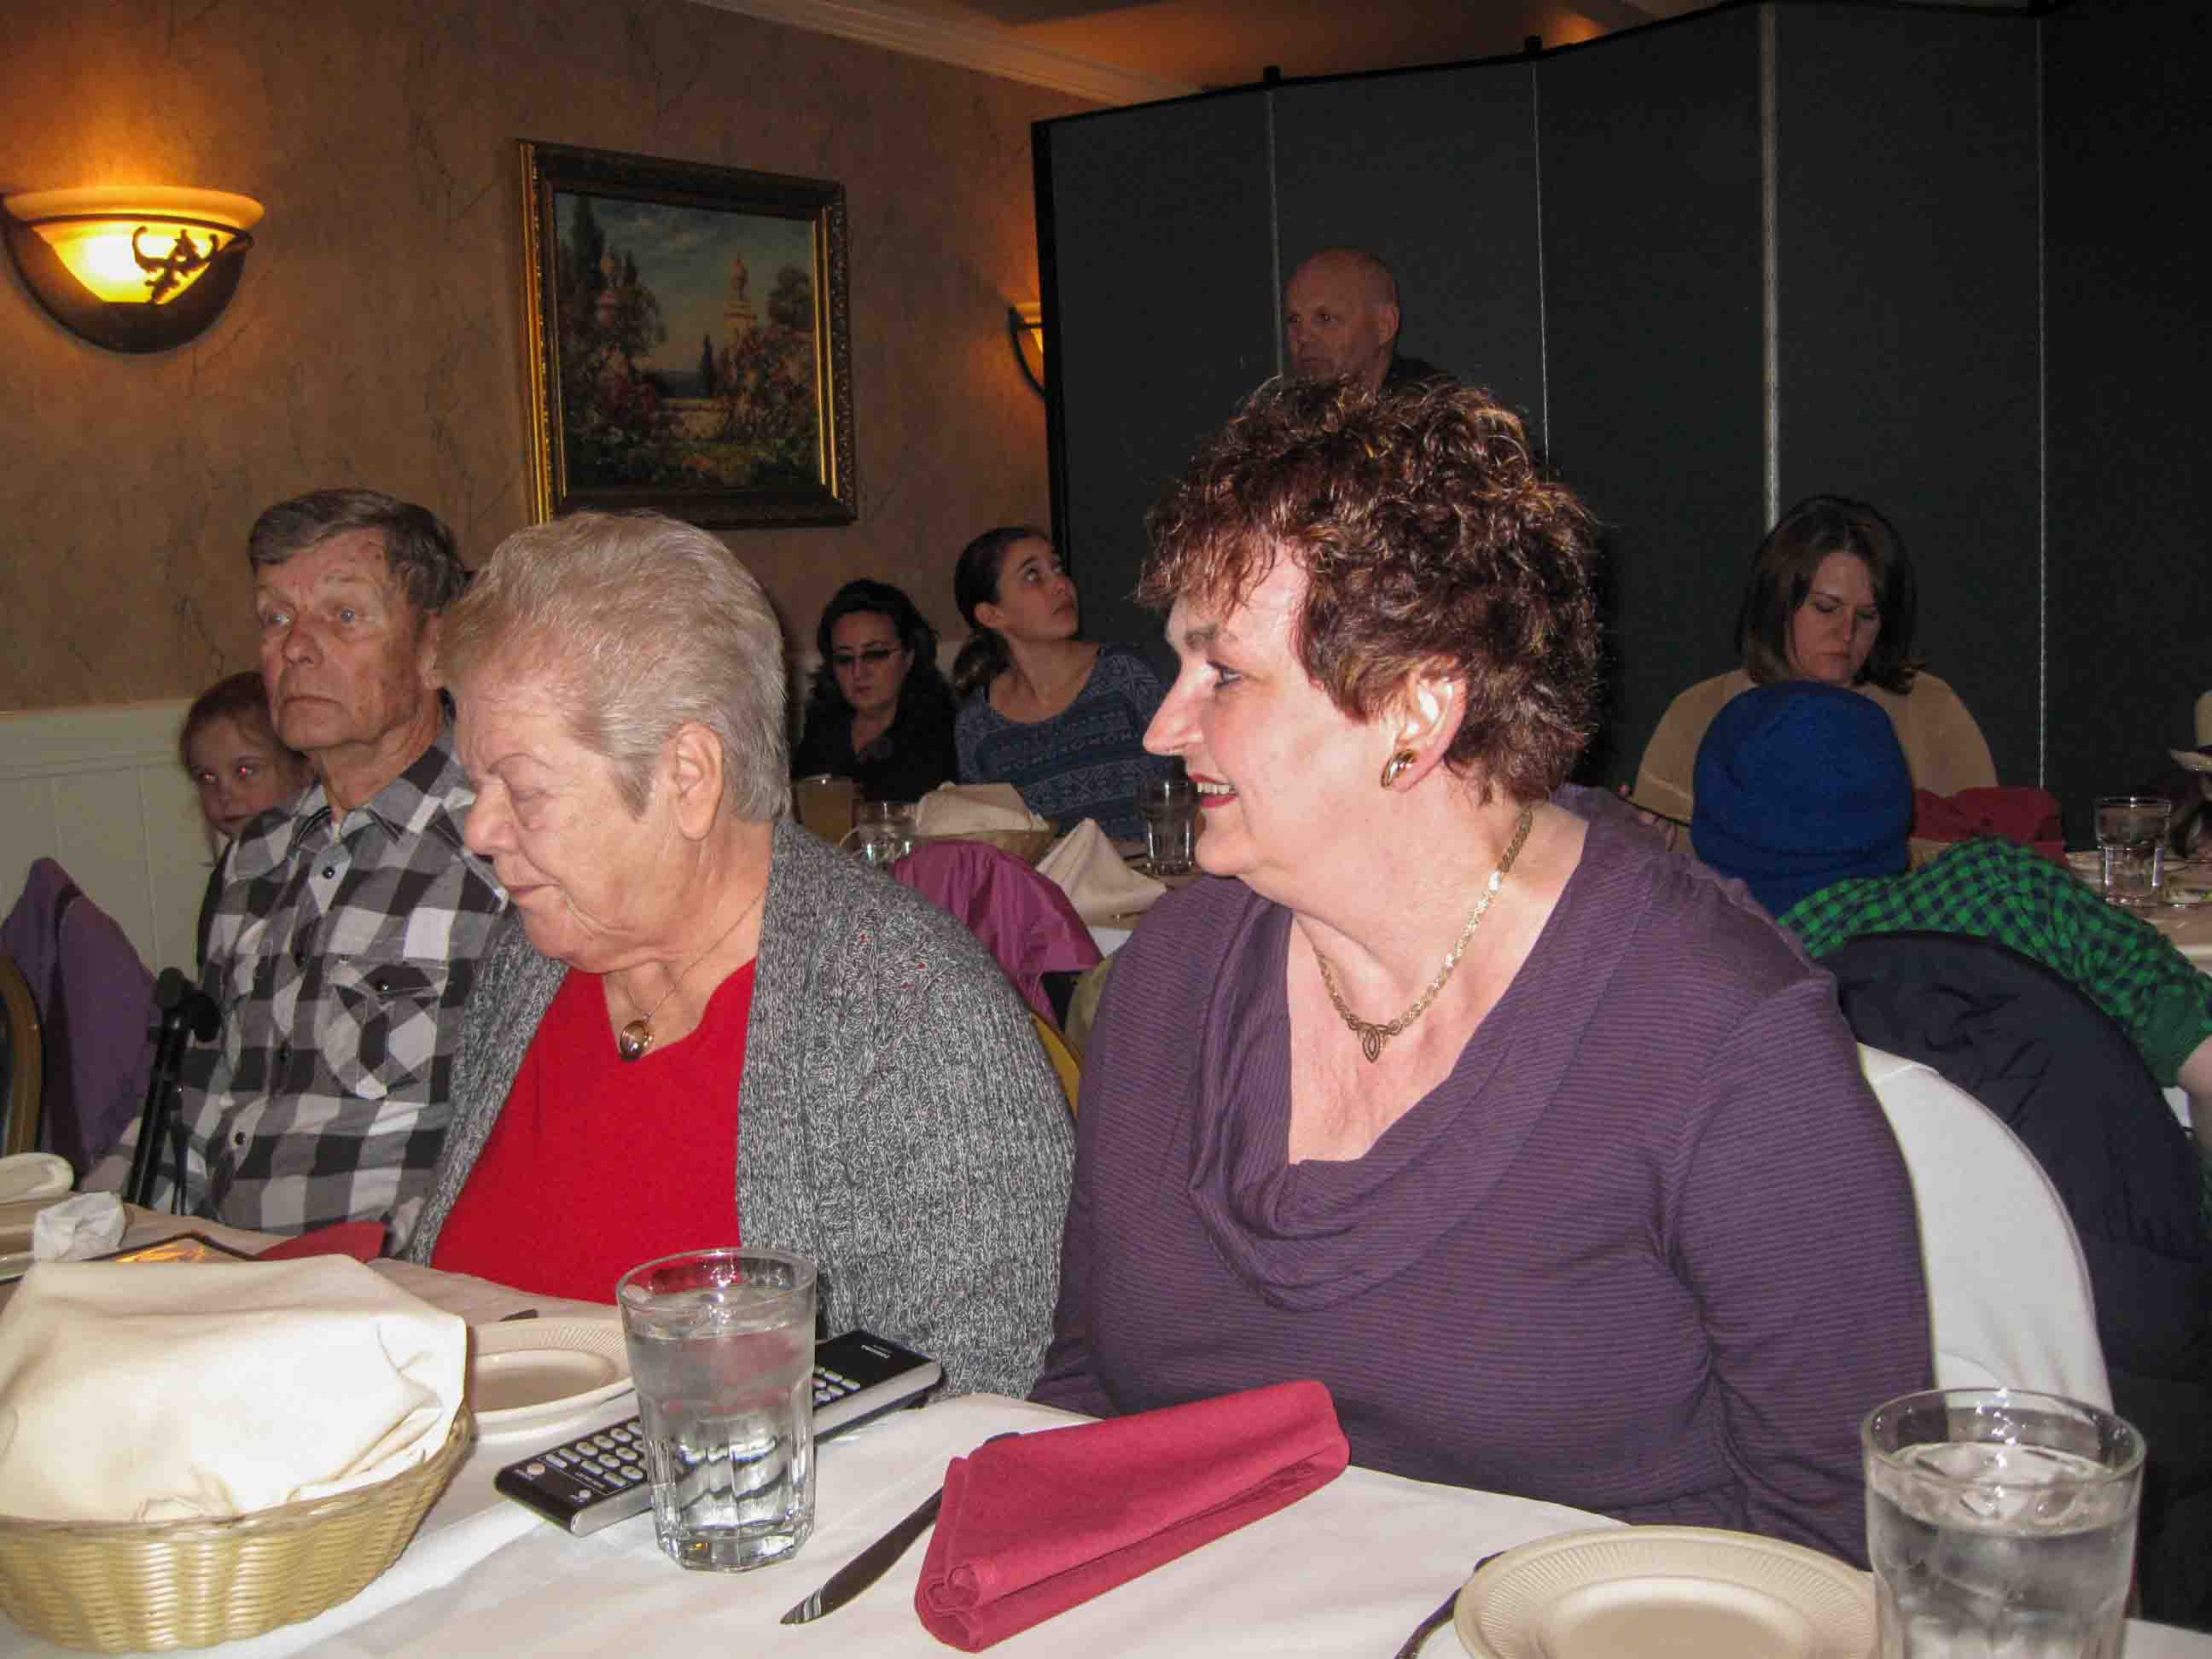 Celebrating the 50th Wedding Anniversary of Shirley & Joel Sexton.  Joel & Shirley, Julane Crabtree
Location:  TAT Restaurant, Columbus OH
Date:  29 Mar 2014
Source:  Julane Crabtree